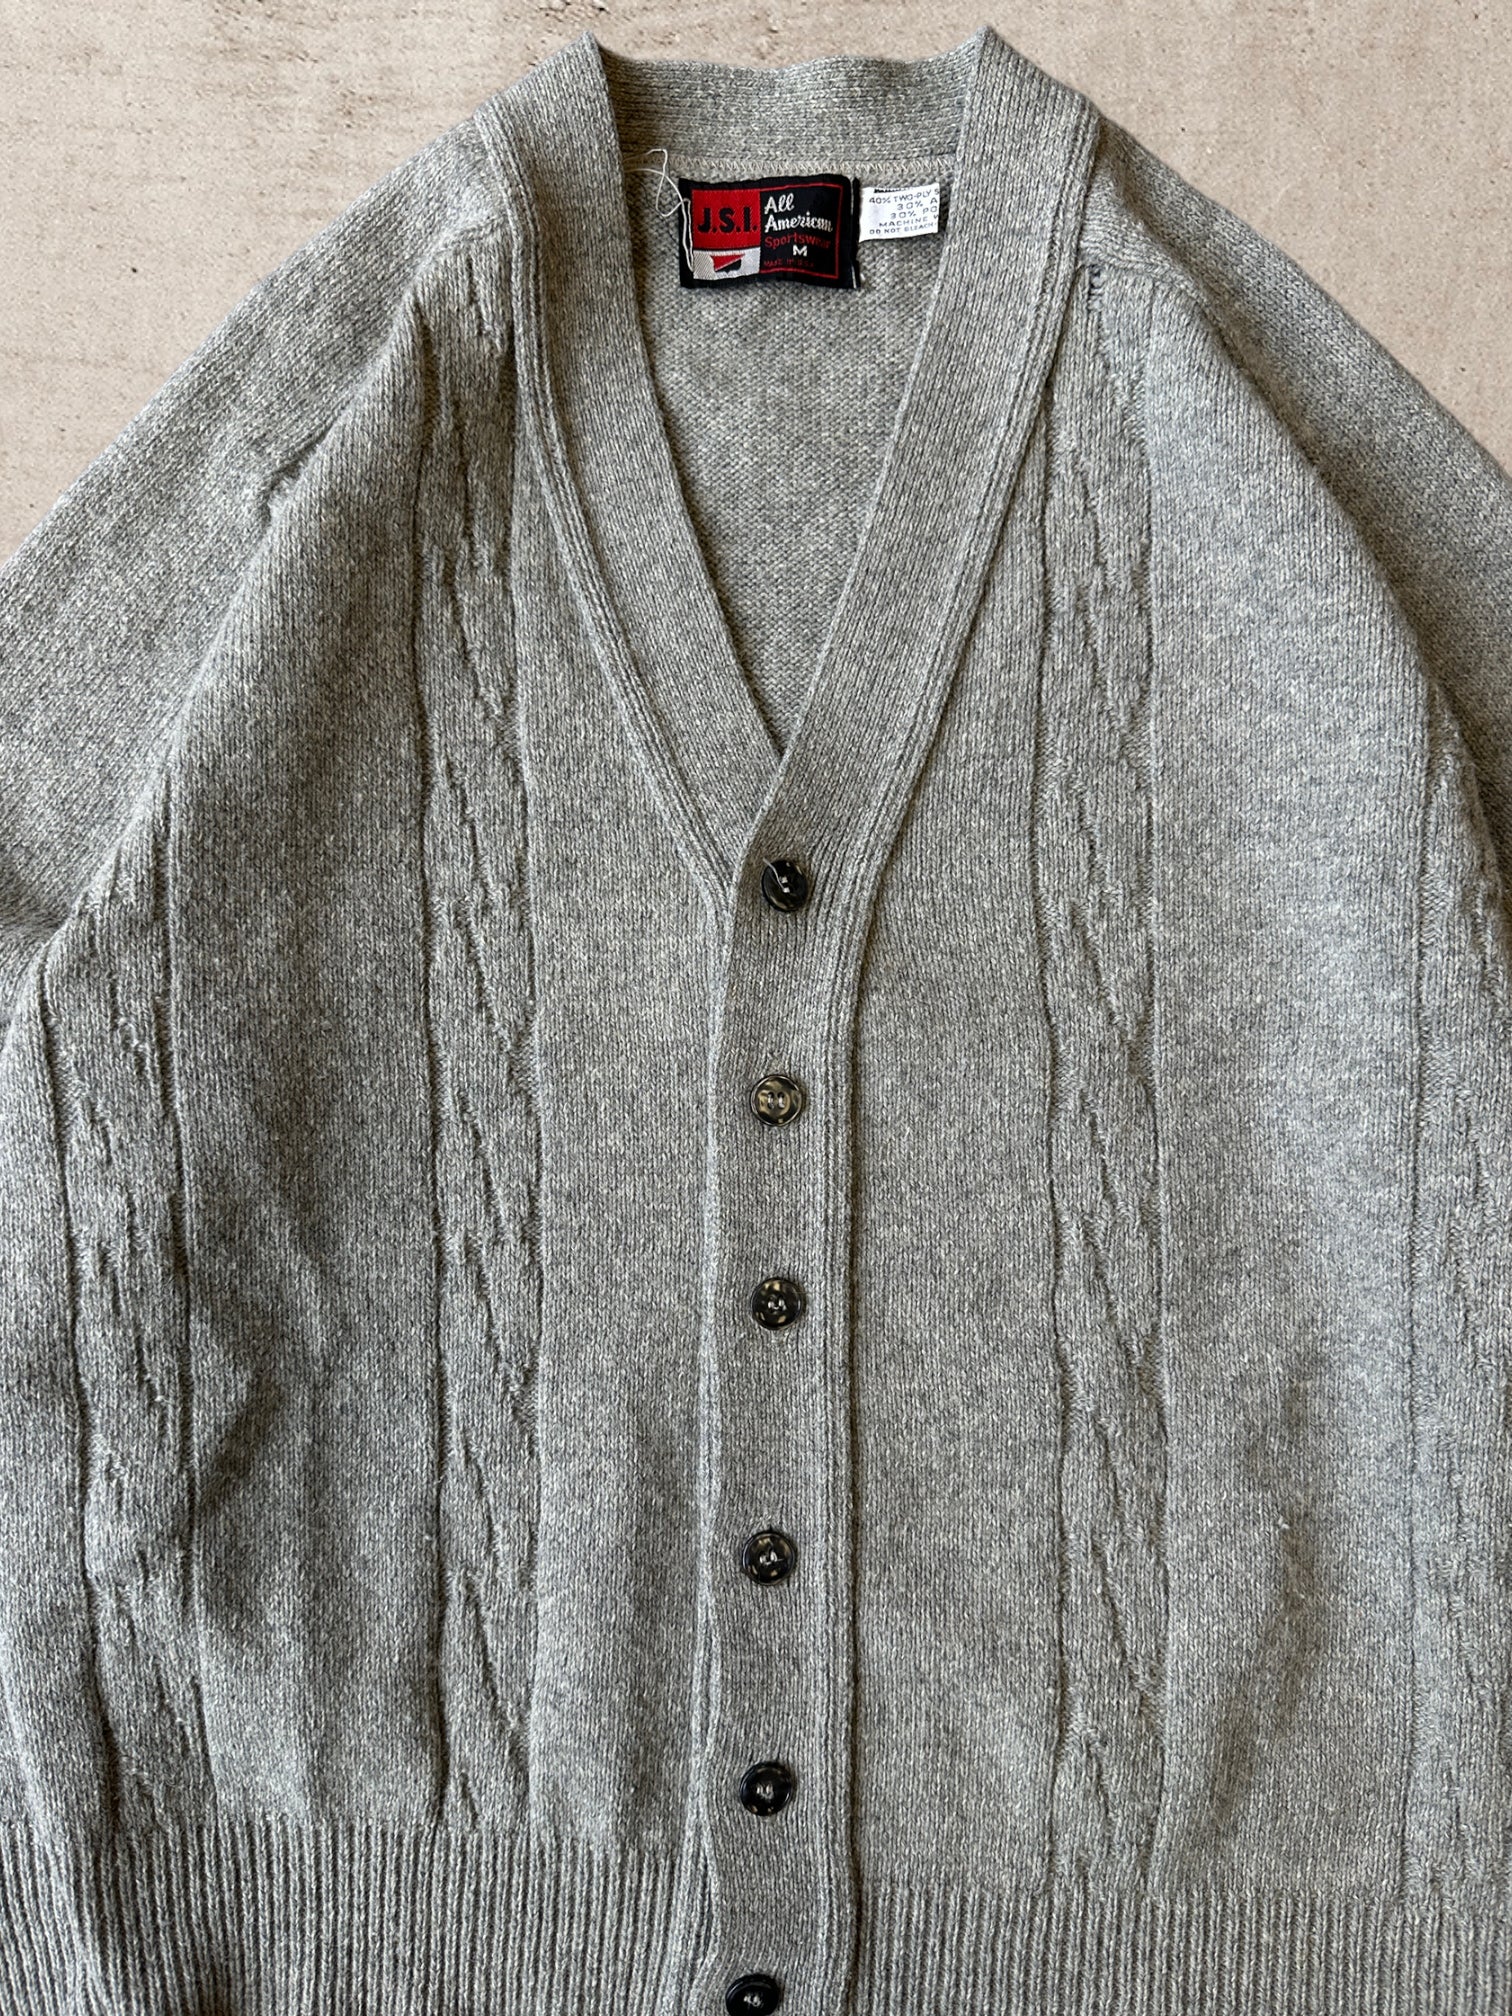 90s Grey Knit Cardigan - Large